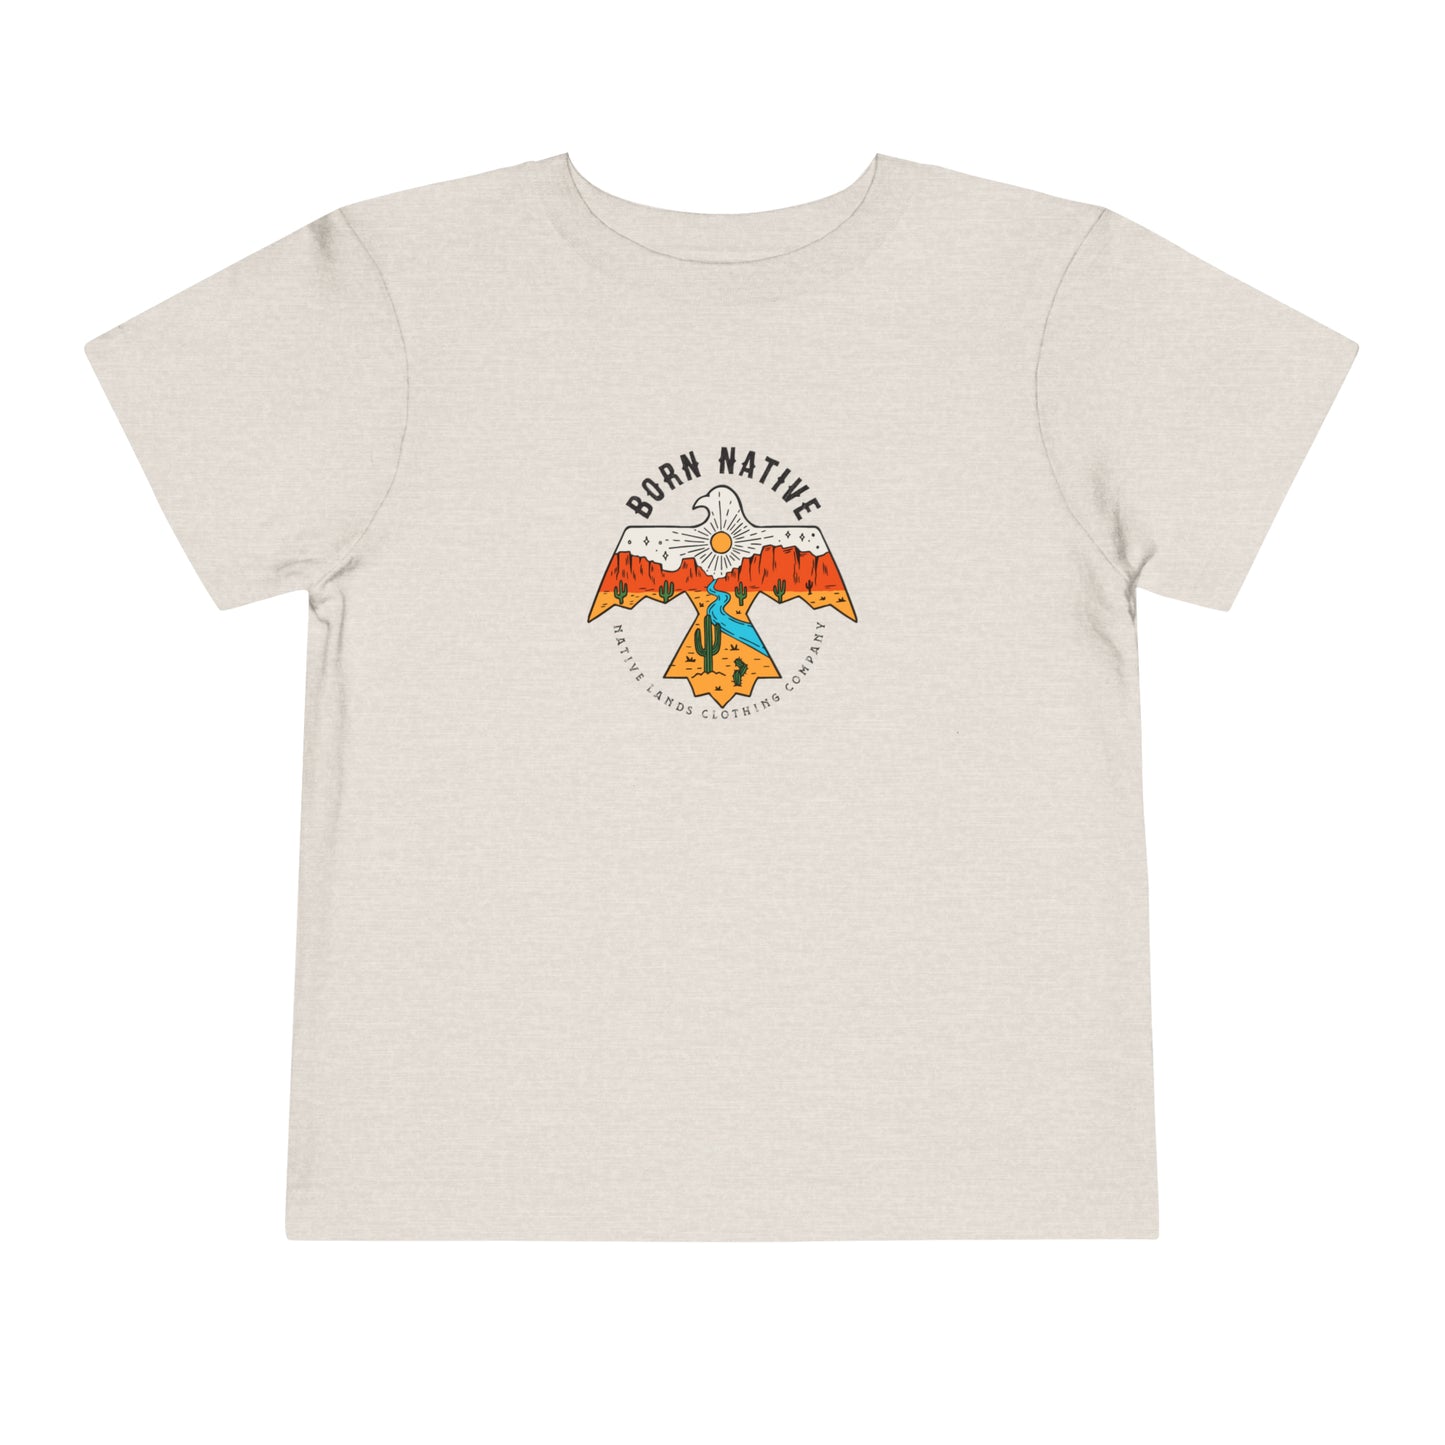 Toddler Born Native Shirt Bomuld Native American